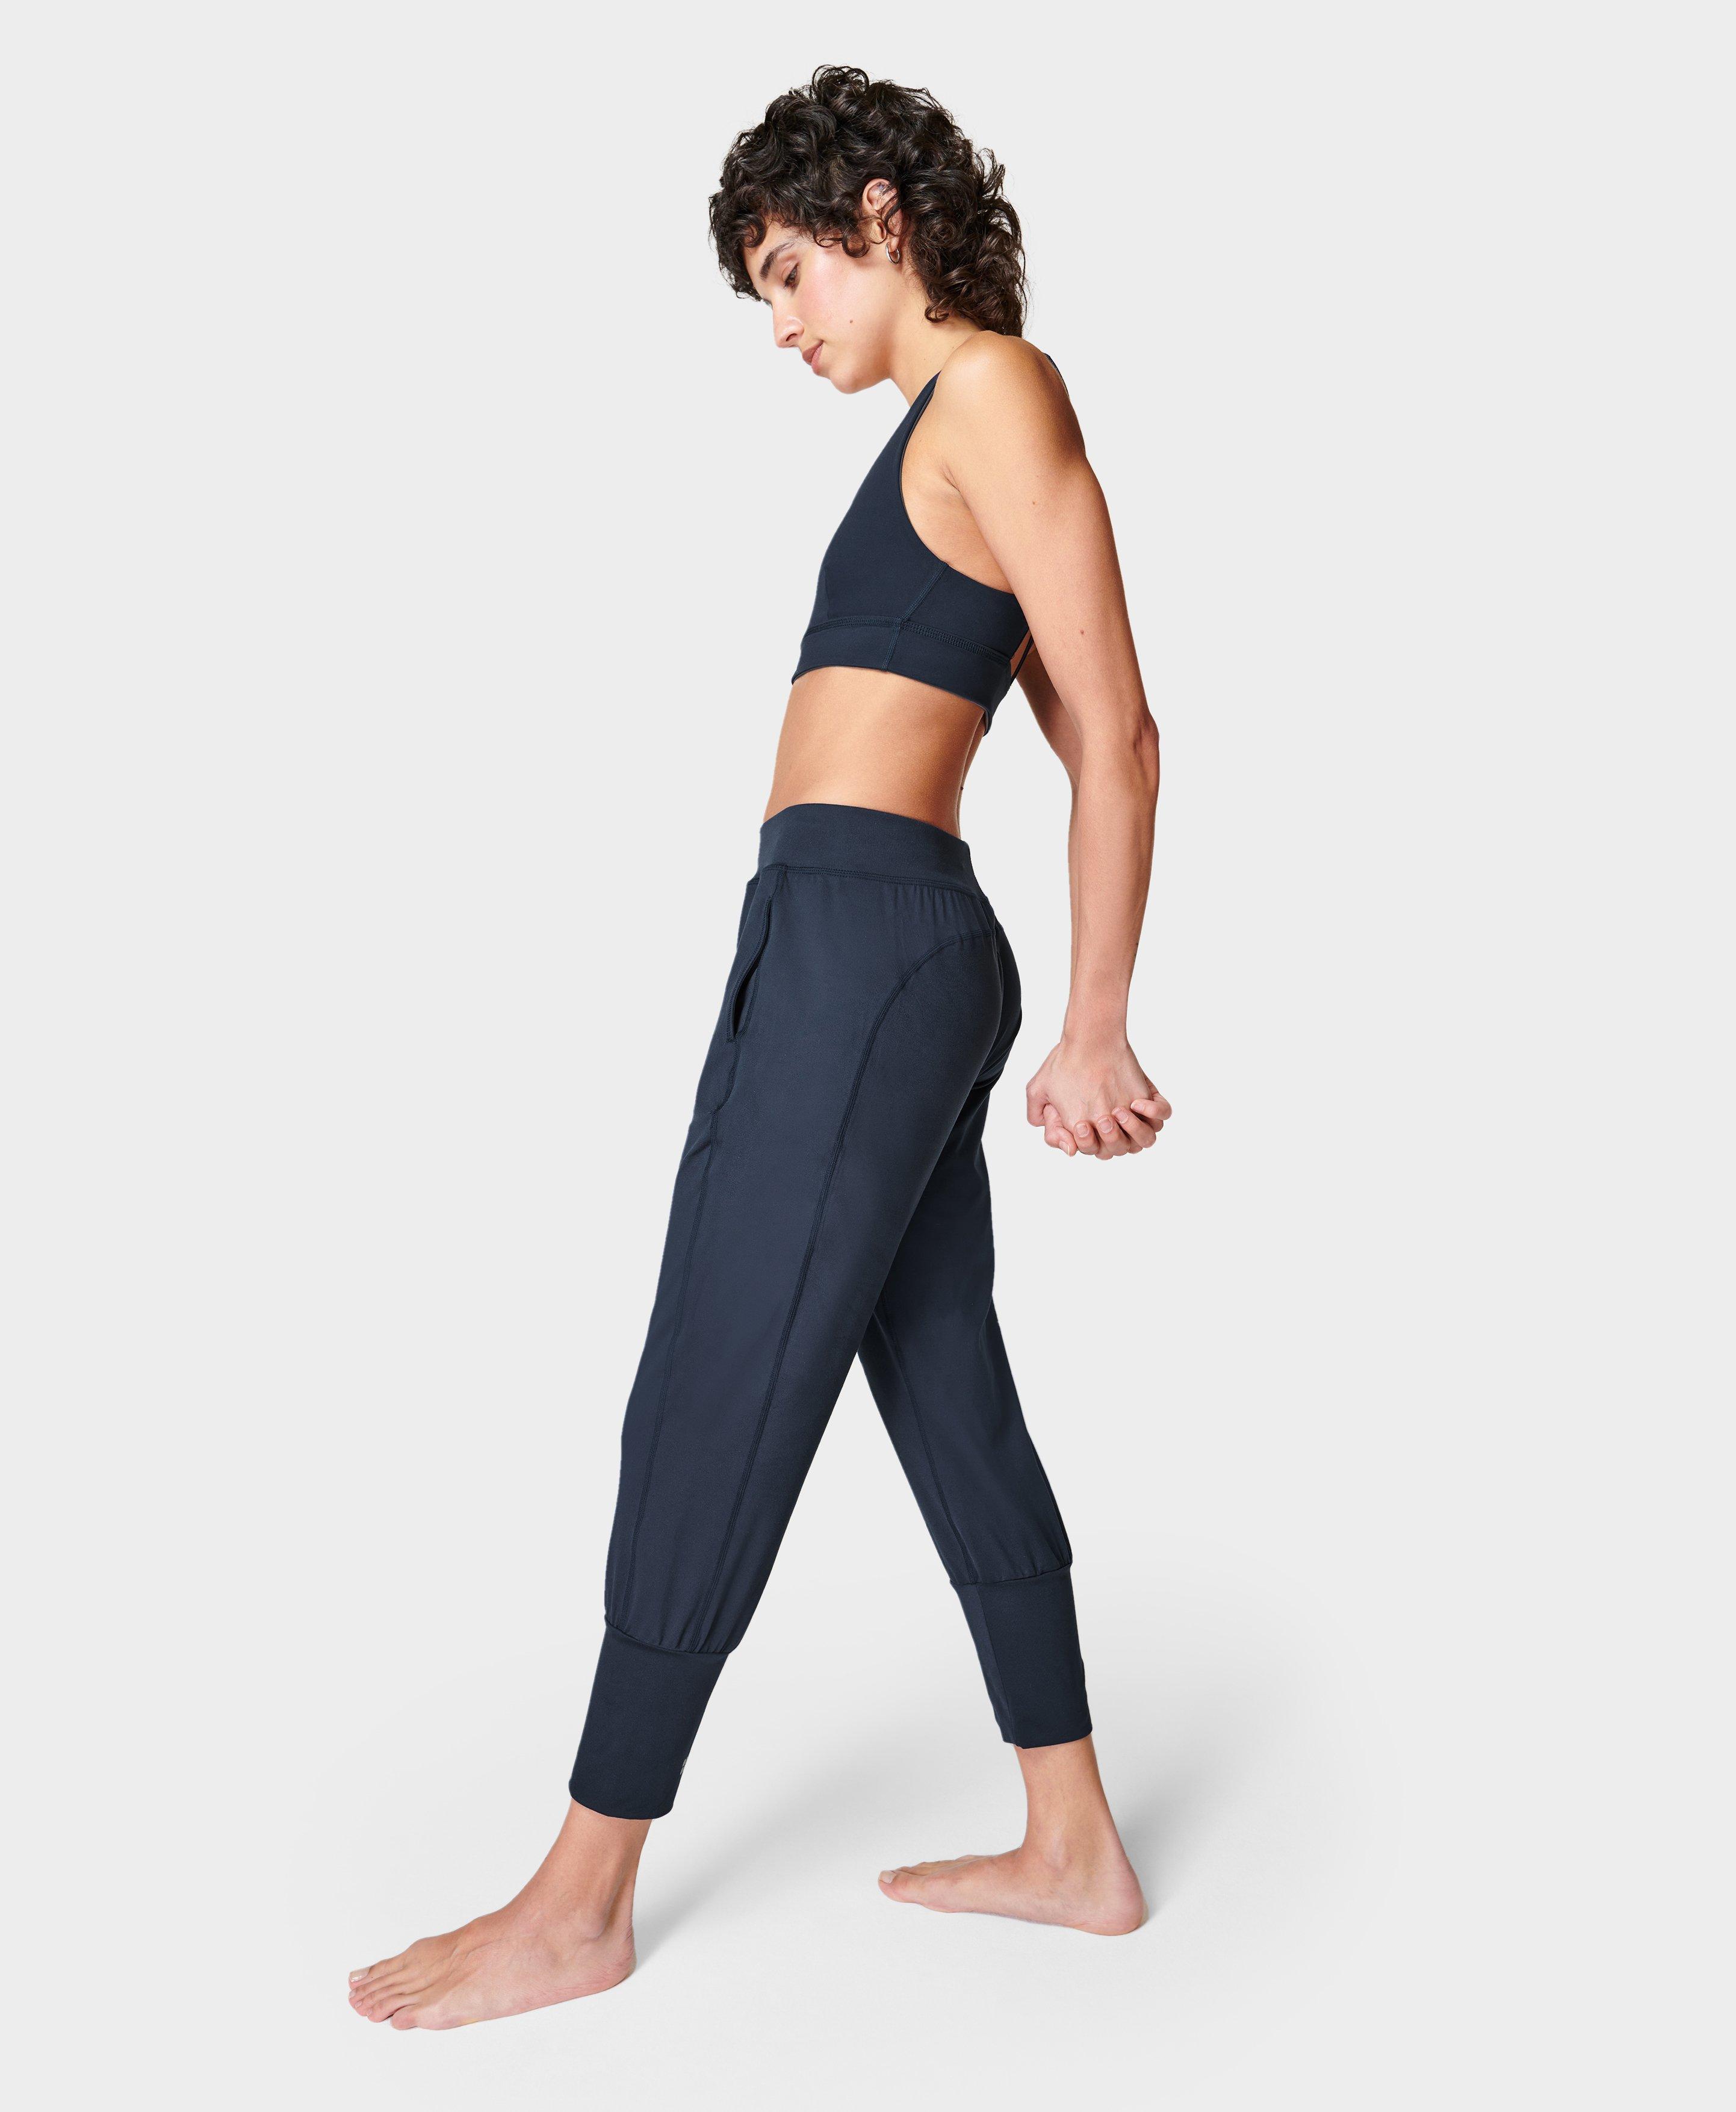 Zenana Capri Cropped Leggings Yoga Pants Cotton Stretch STORE CLOSING